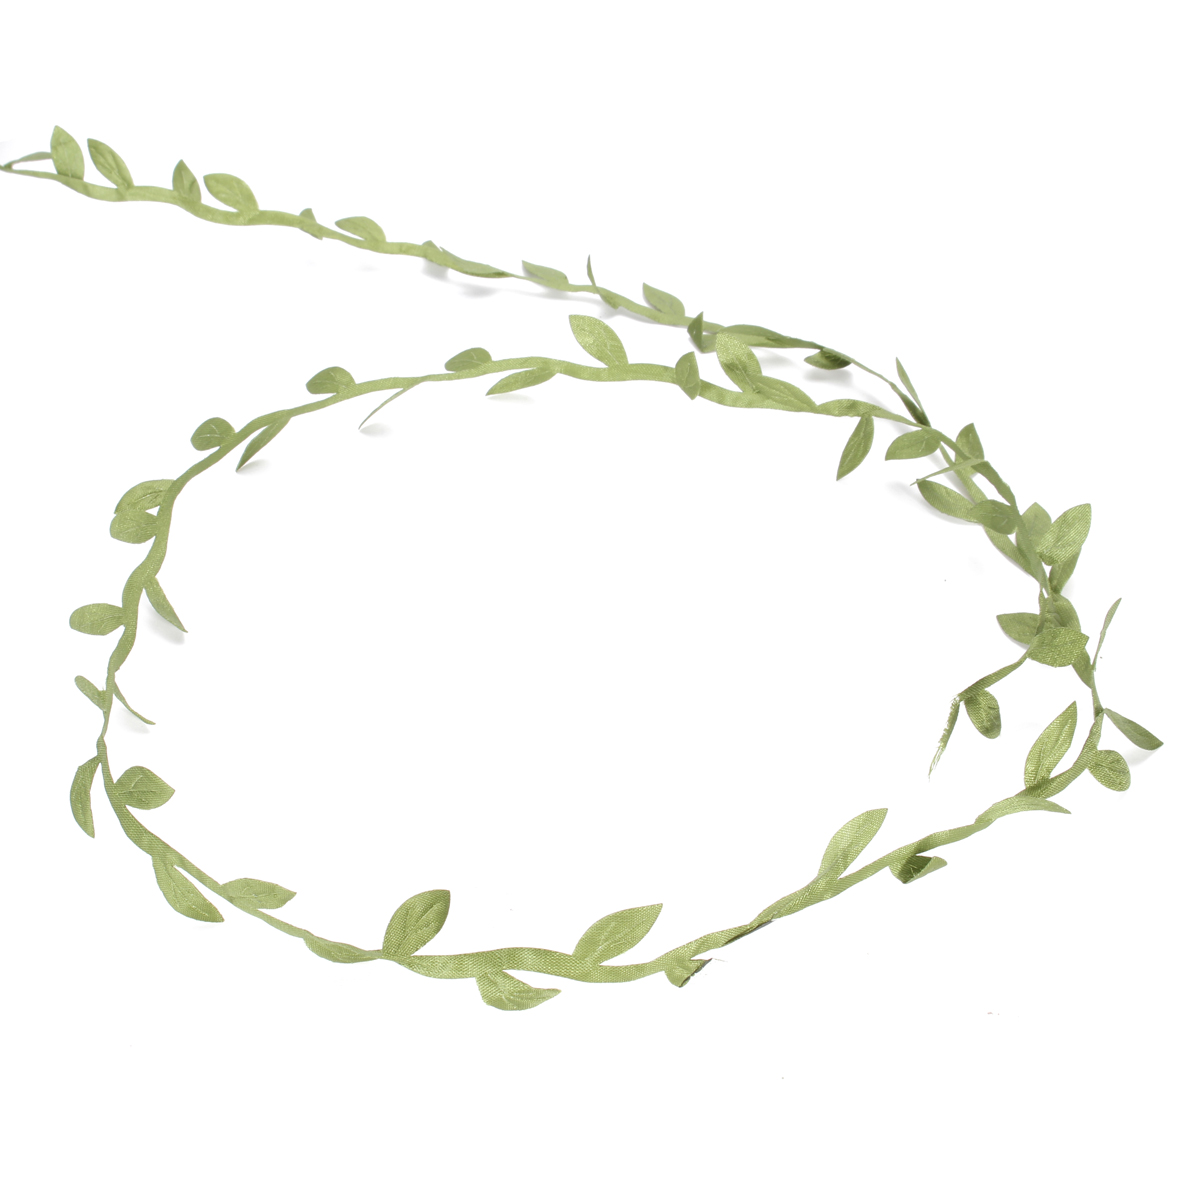 40-200m-Artificial-Green-Ivy-Vine-Leaf-Garland-Rattan-Foliage-Home-Wedding-Decorations-1634426-8